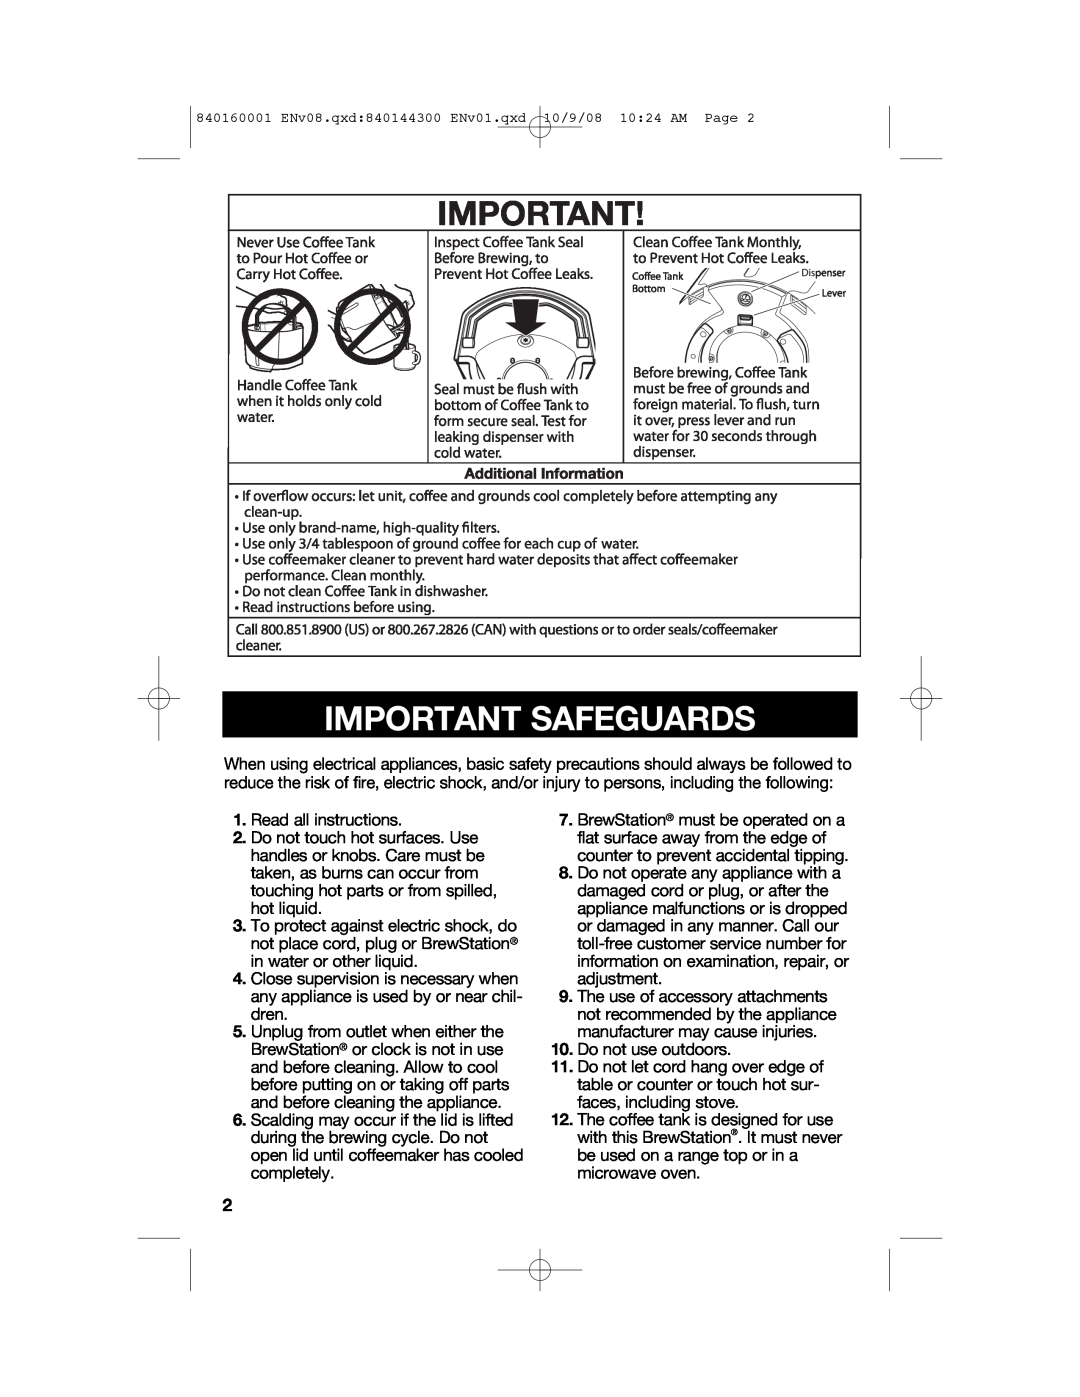 Hamilton Beach 47214 manual Important Safeguards 